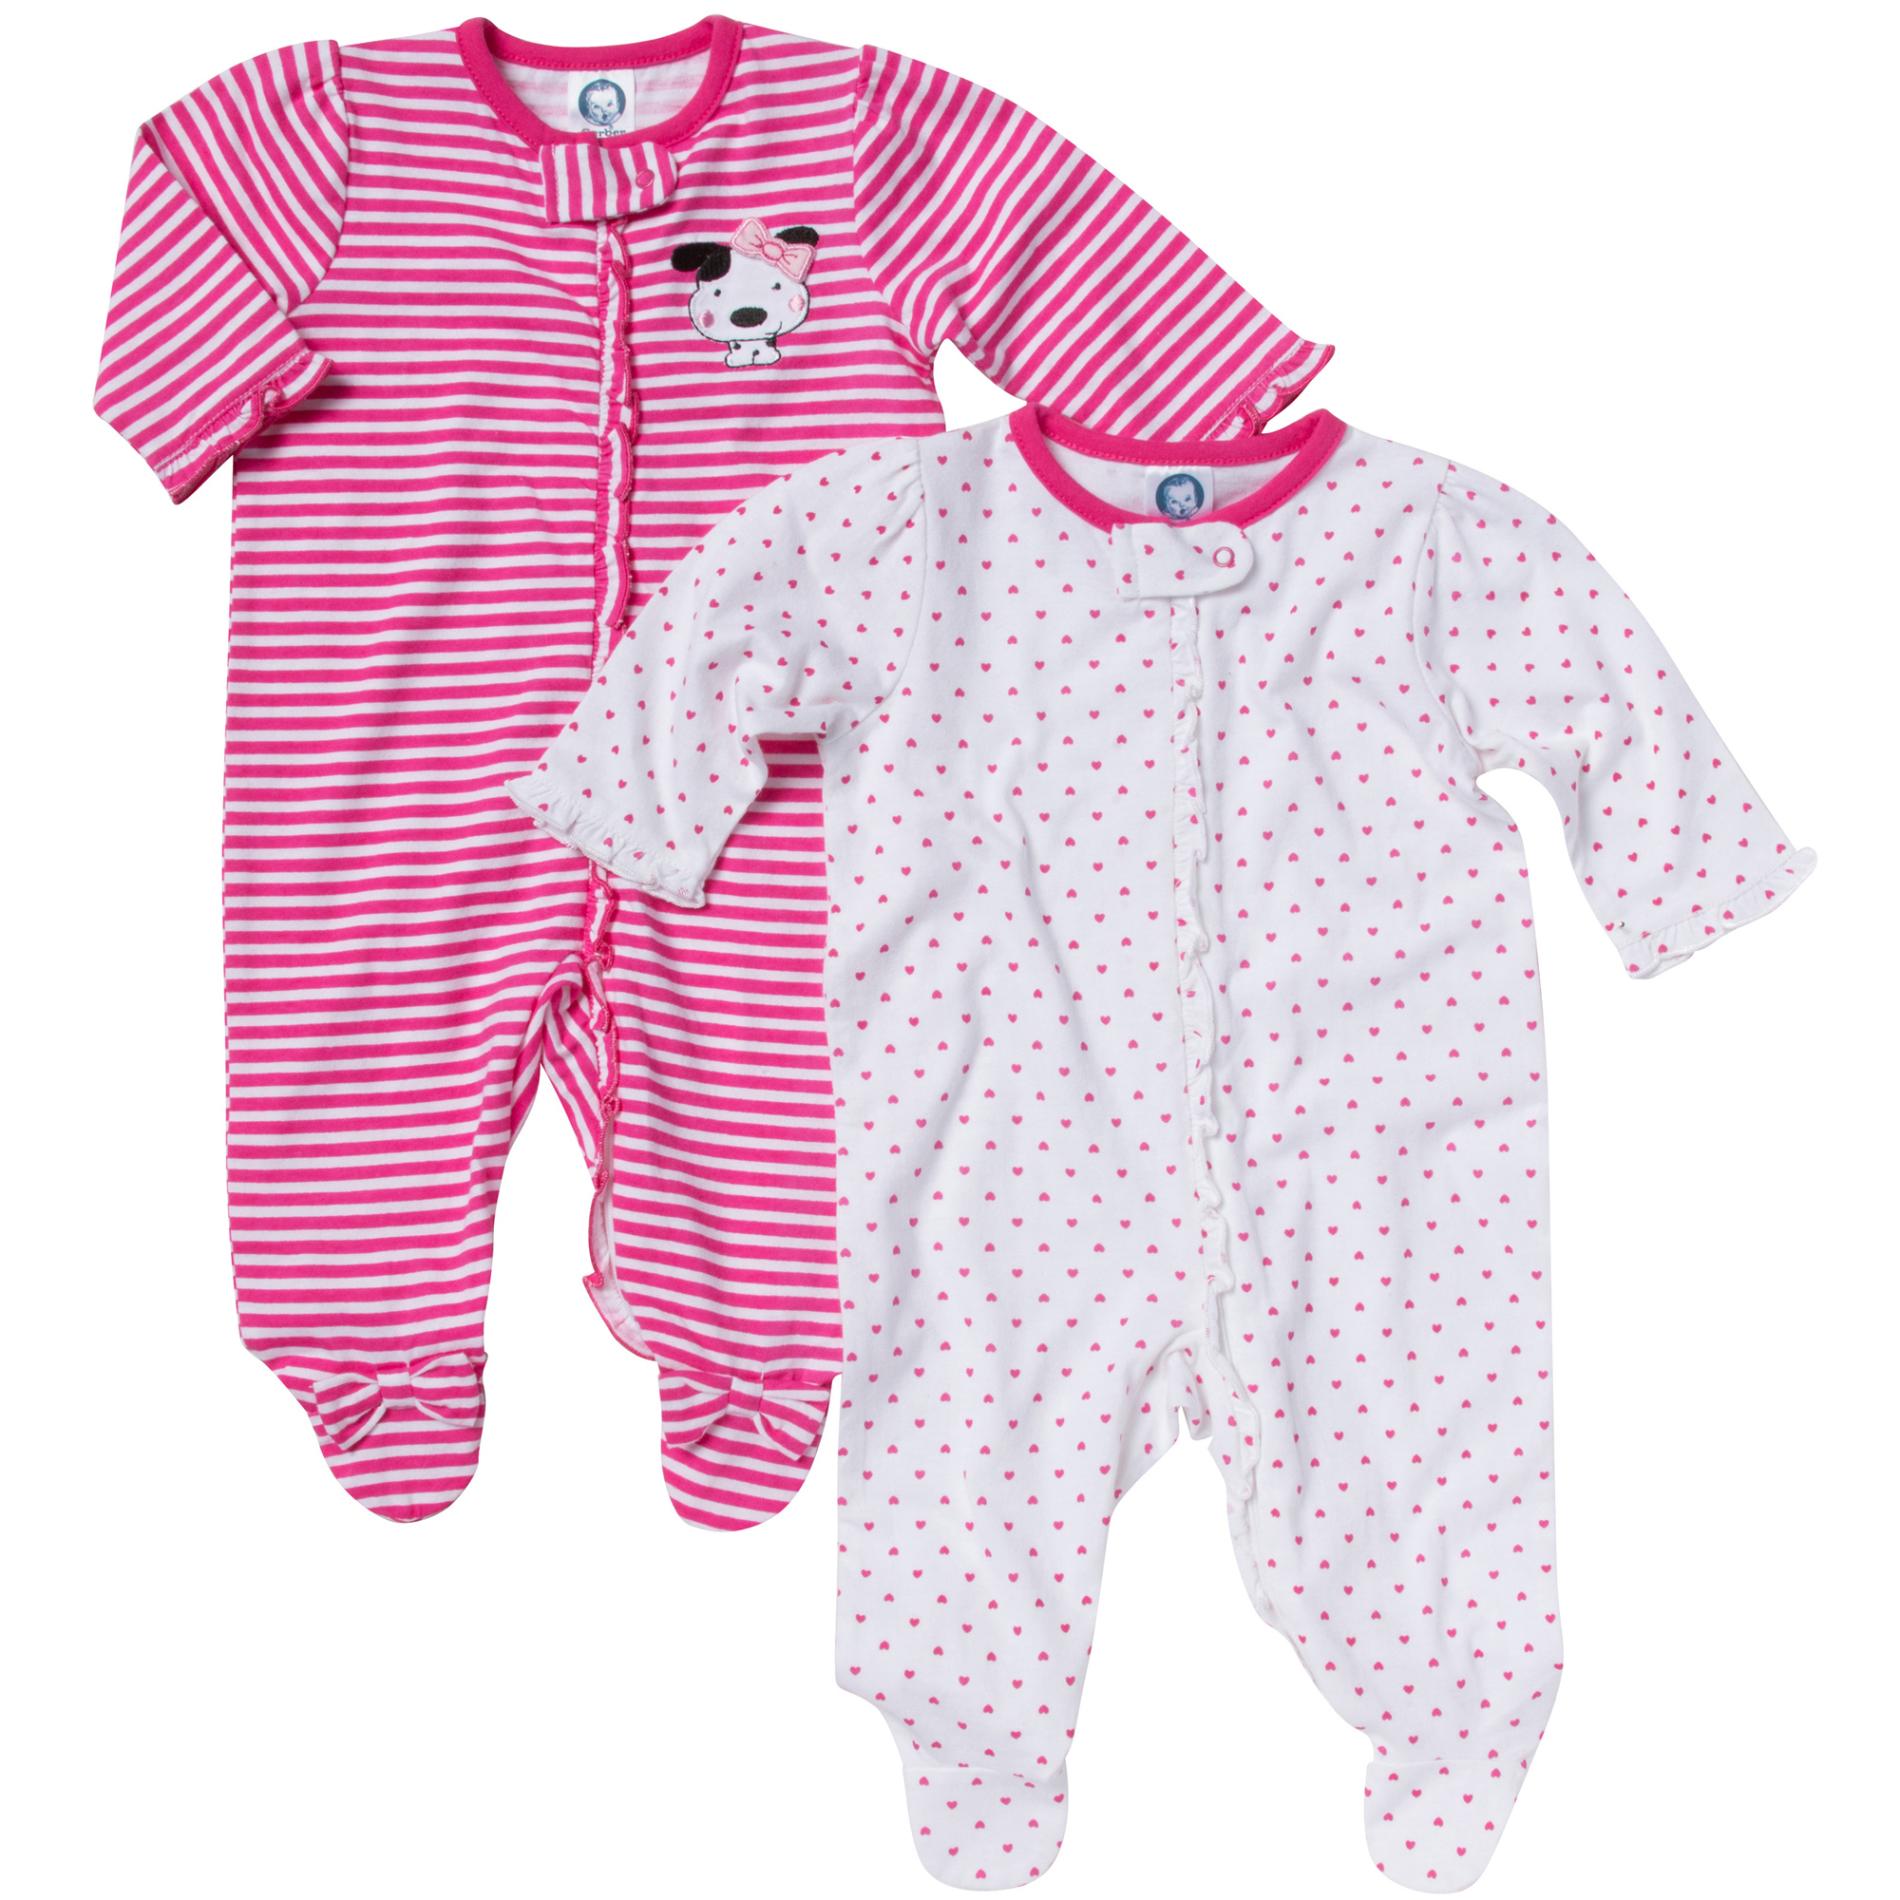 Gerber Infant Girl's 2-Pack Footed Sleeper Pajamas - Polka Dot & Striped